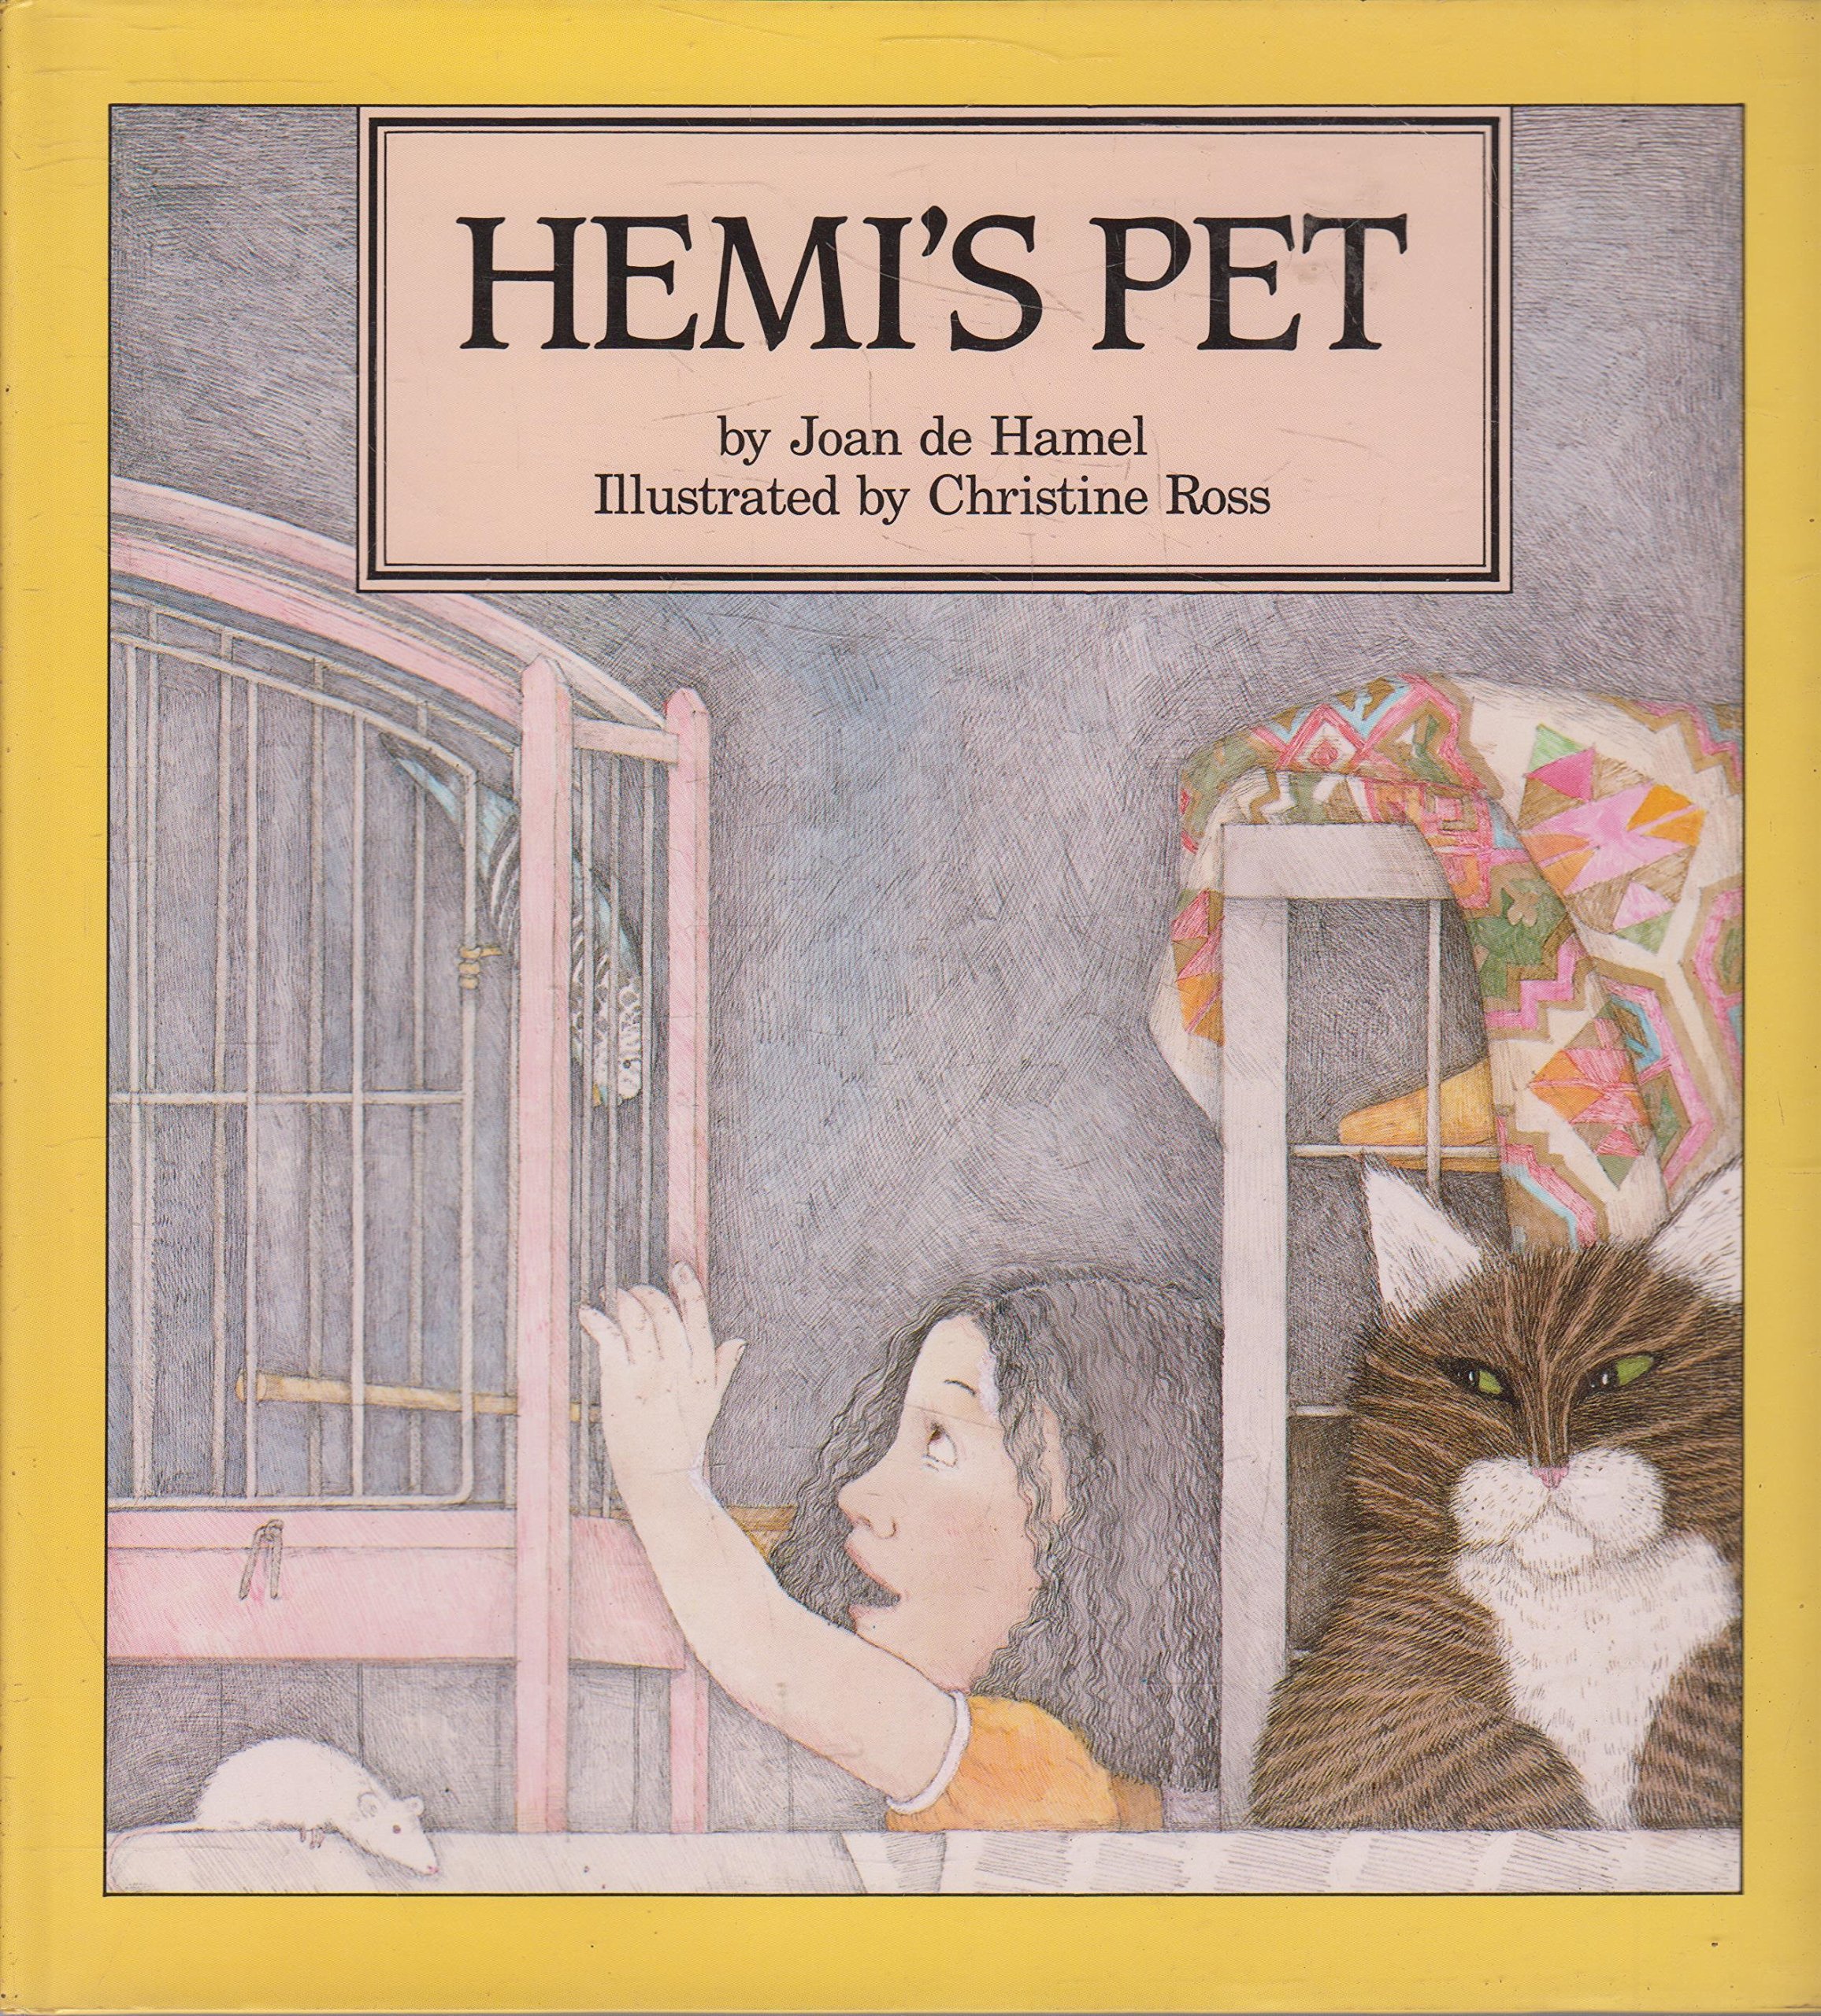 Hemi's pet magazine reviews